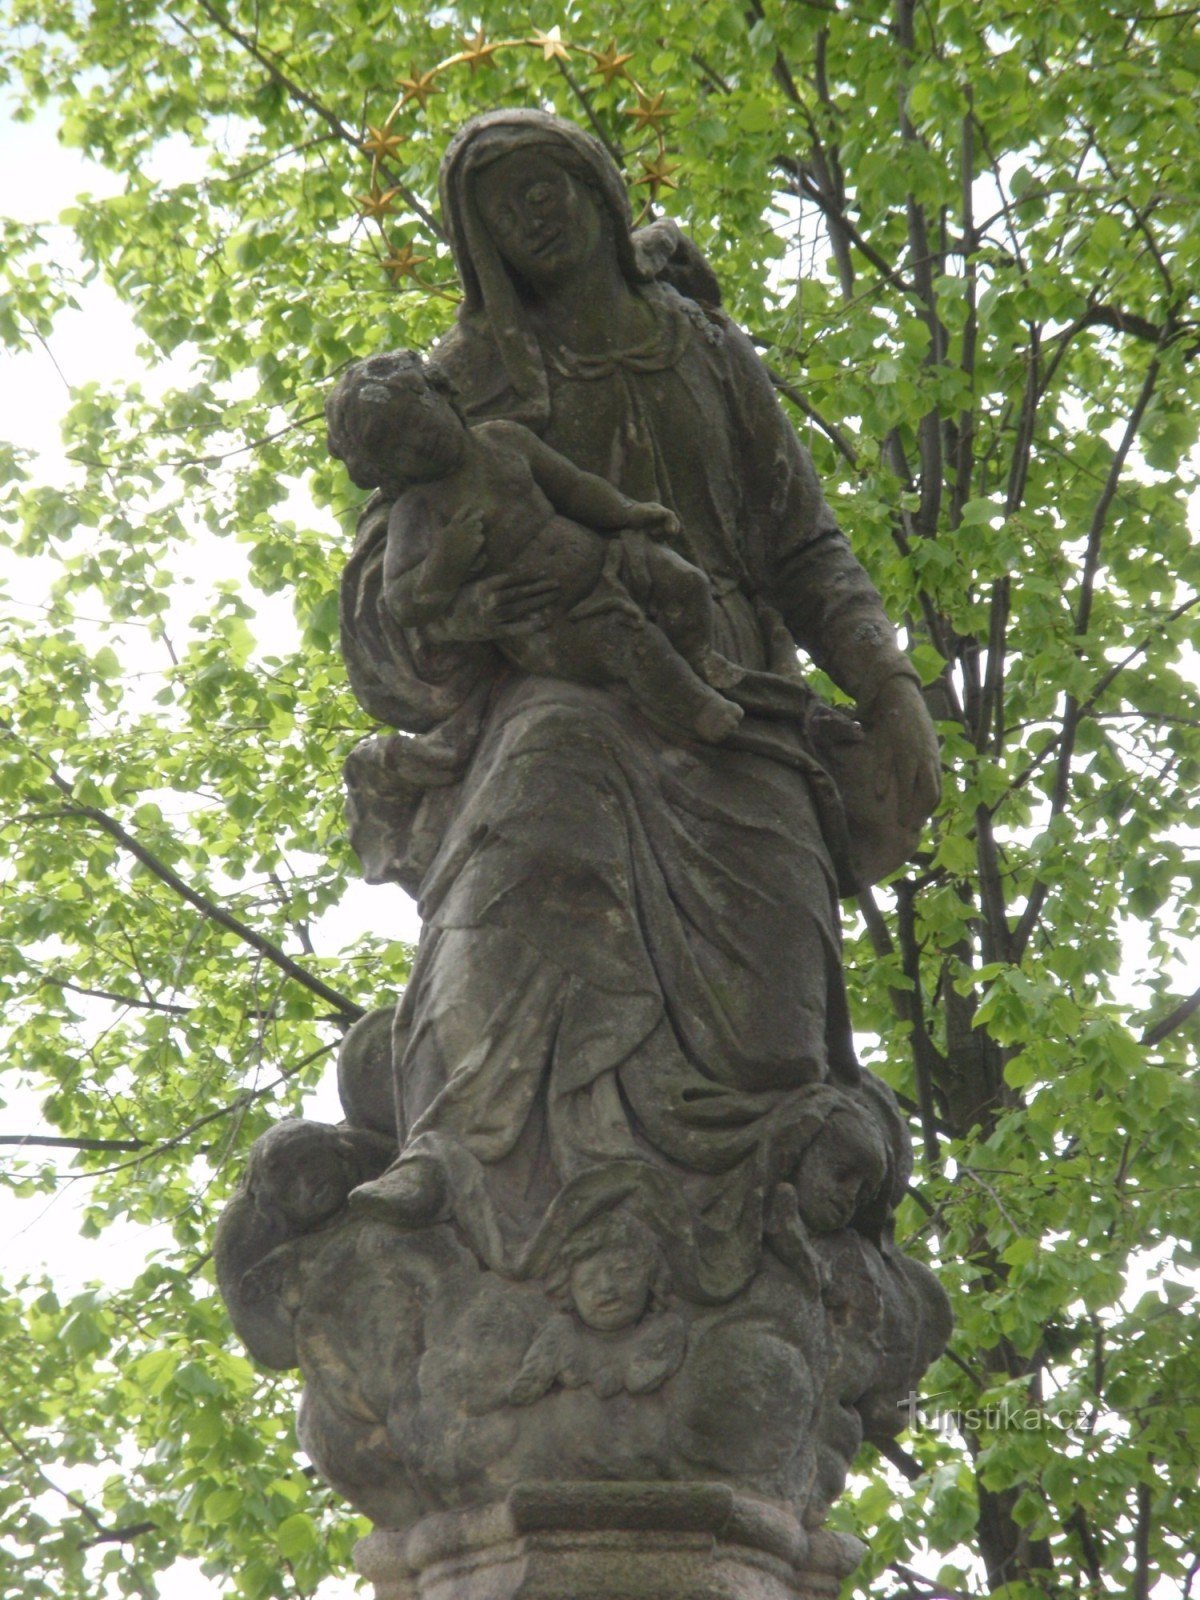 Žďár nad Sázavou - en kolumn med en staty av Jungfru Maria